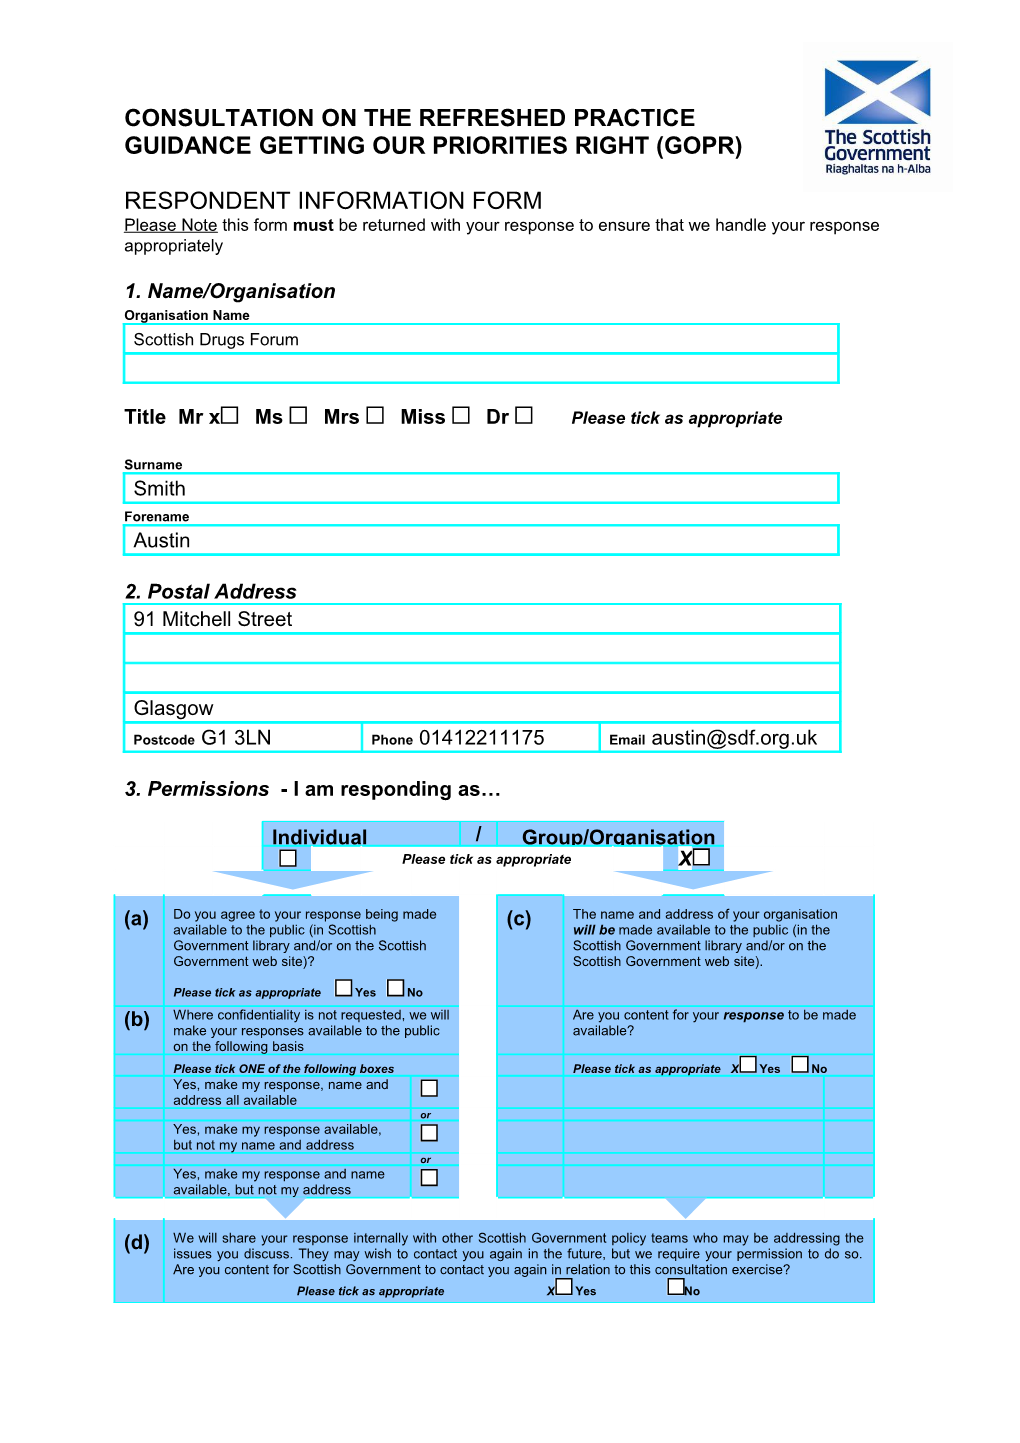 Respondent Information Form (RIF) s2